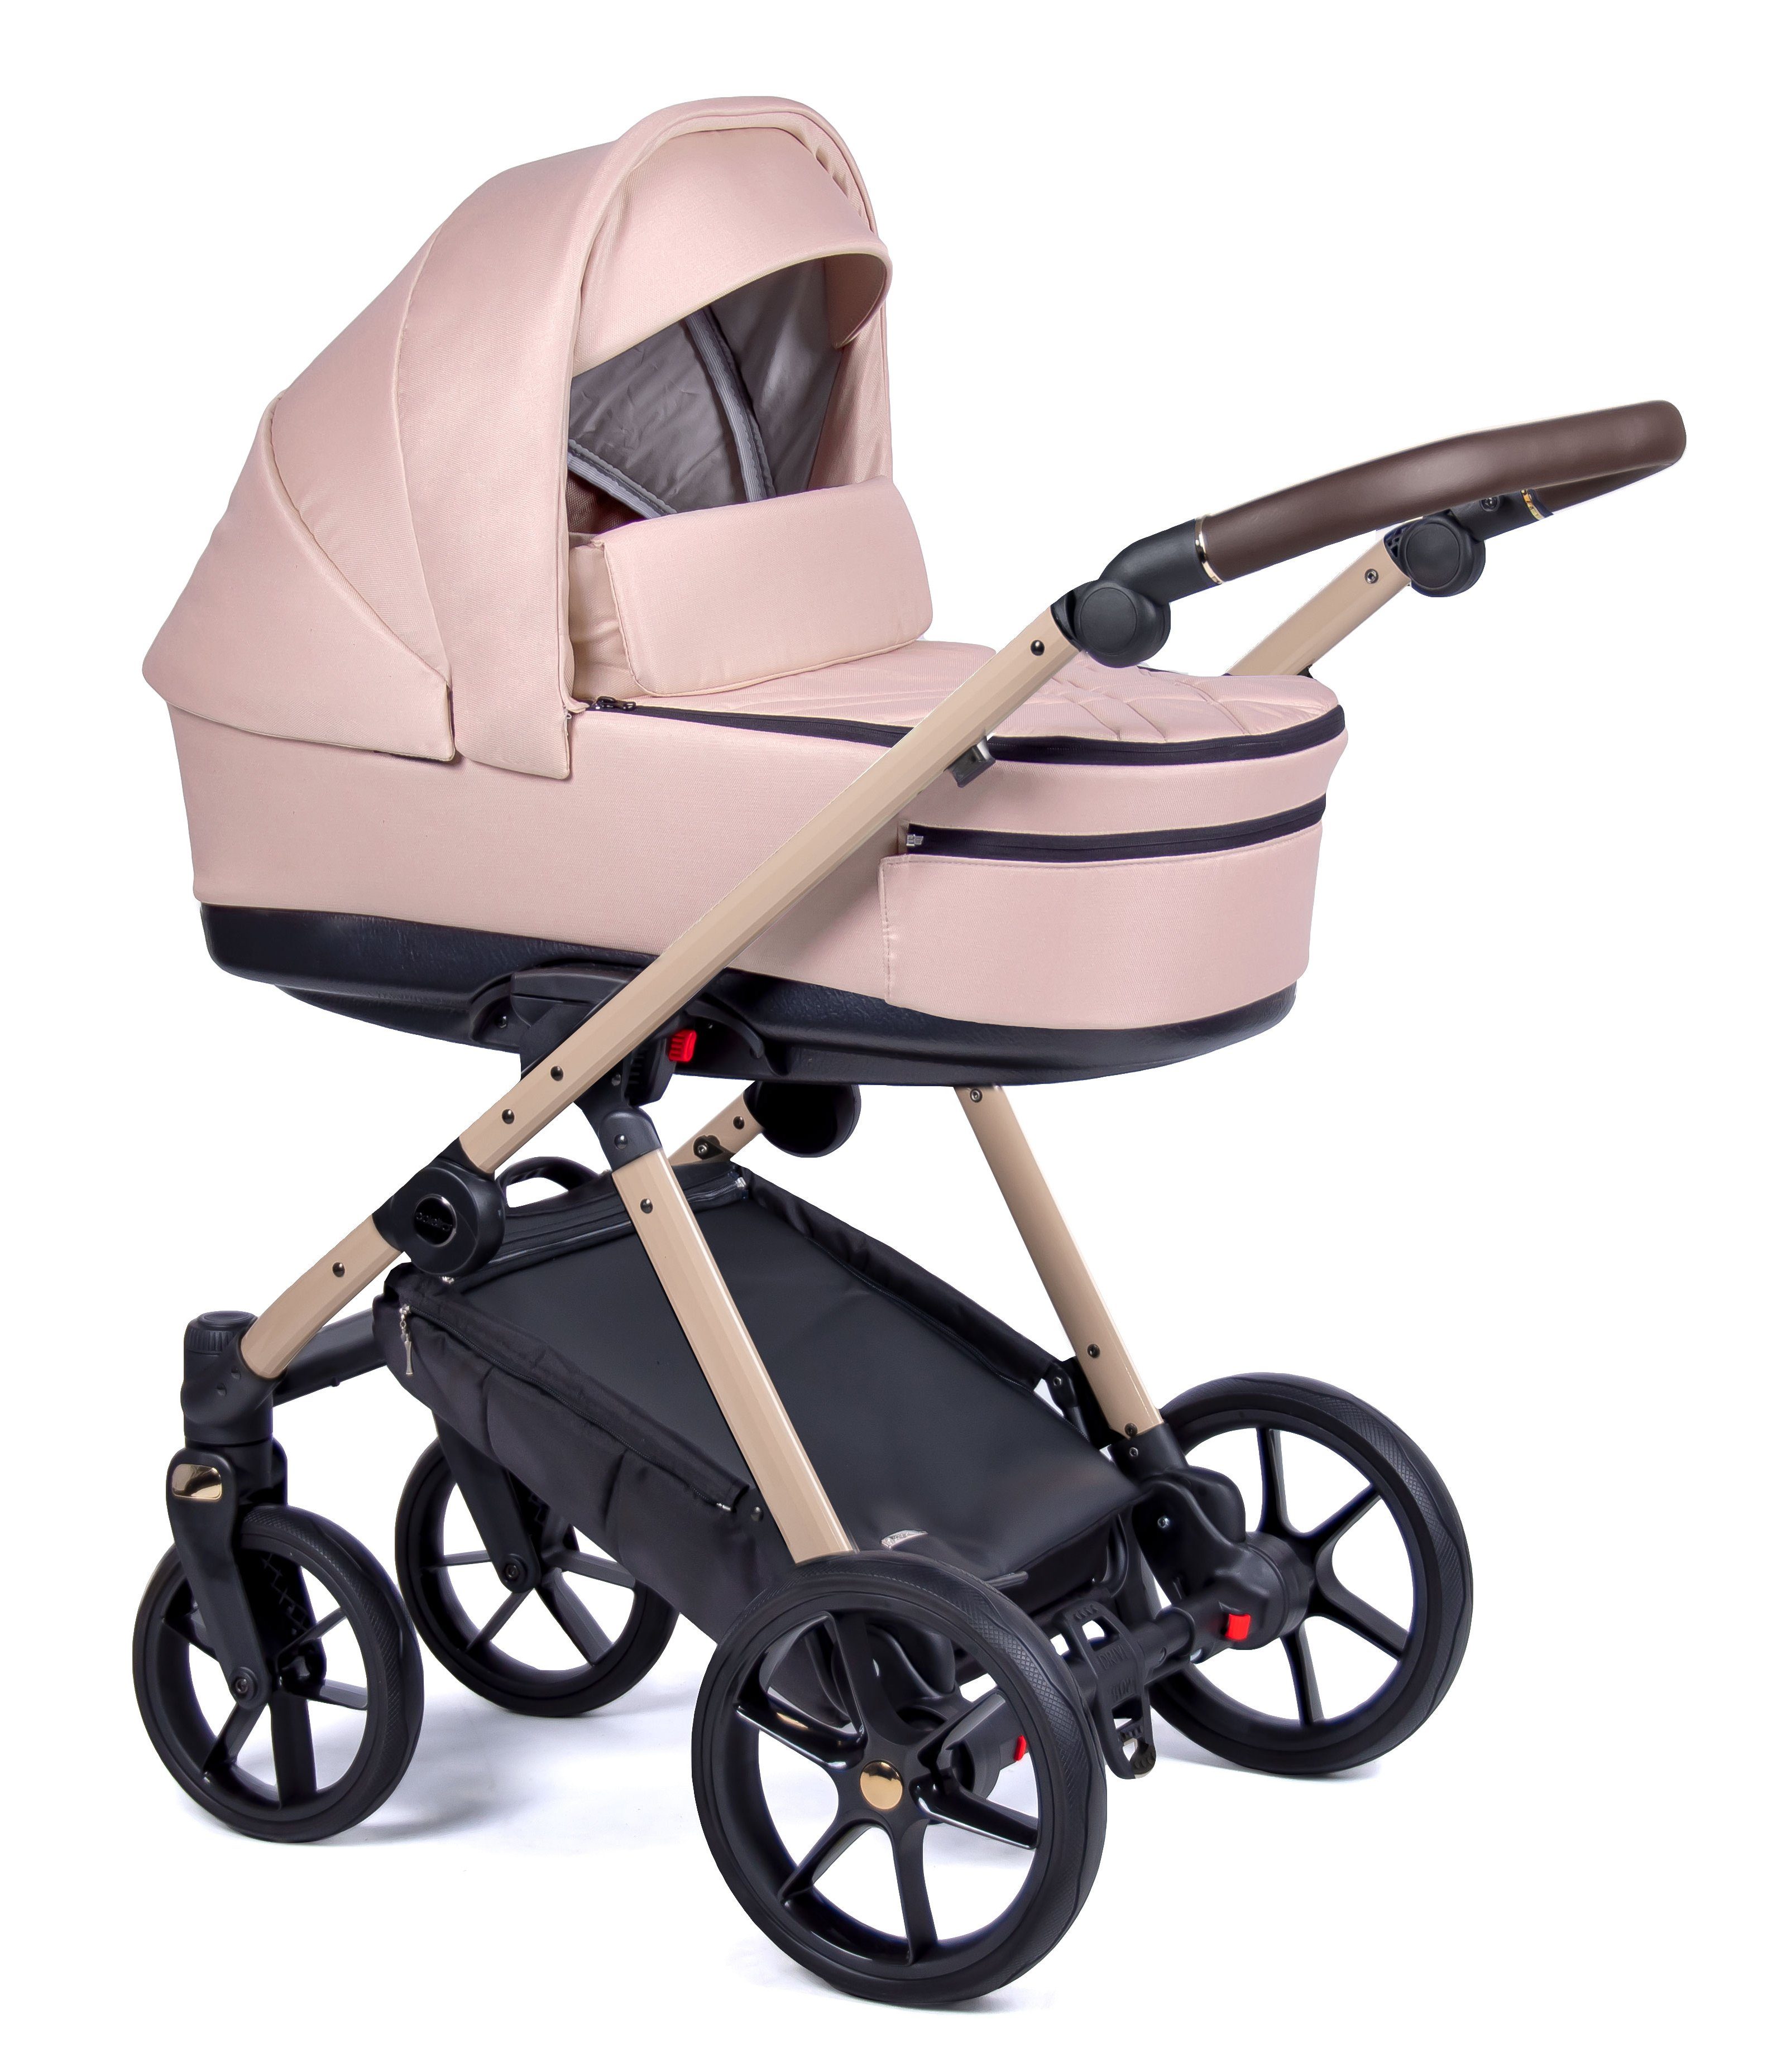 babies-on-wheels Kombi-Kinderwagen 2 in 1 Teile = Gestell - 24 Axxis beige in Kinderwagen-Set - 14 Designs Creme